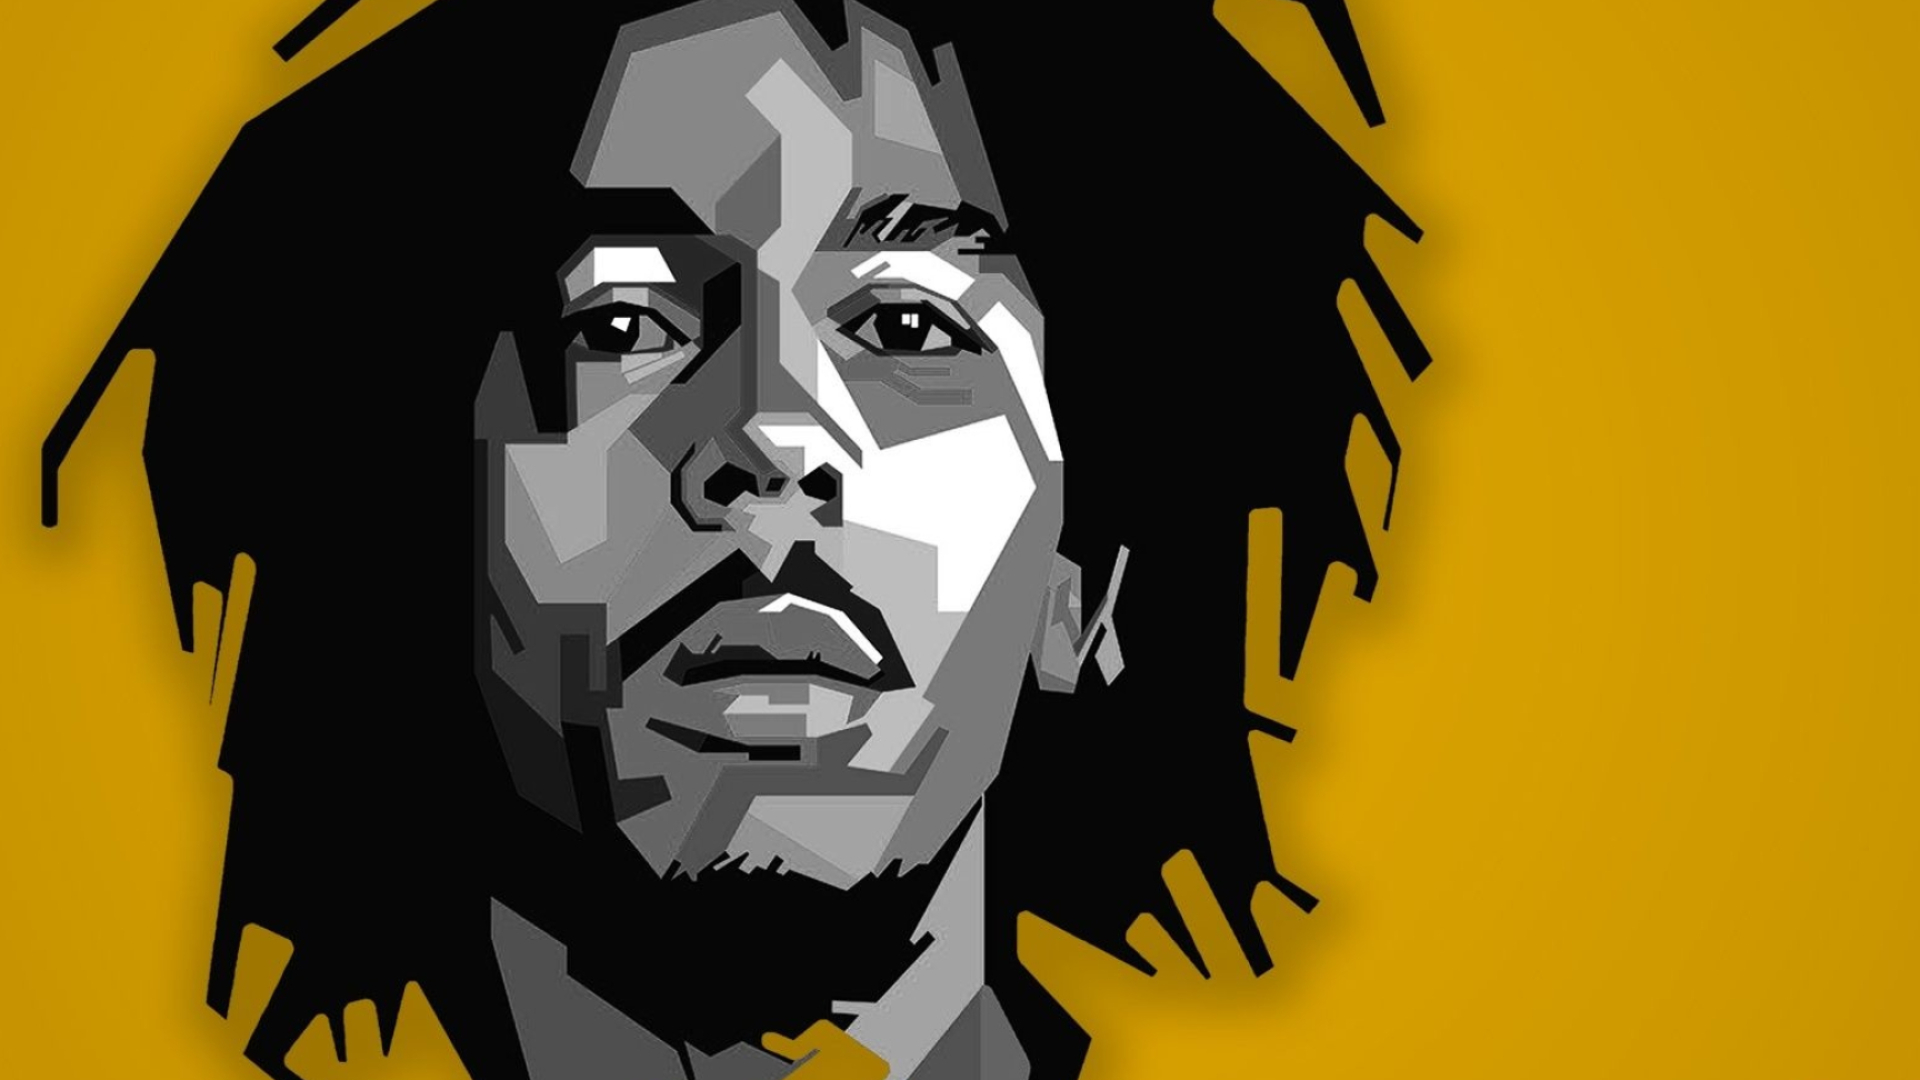 Bob Marley: Legendary Jamaican singer, musician and songwriter. 1920x1080 Full HD Wallpaper.